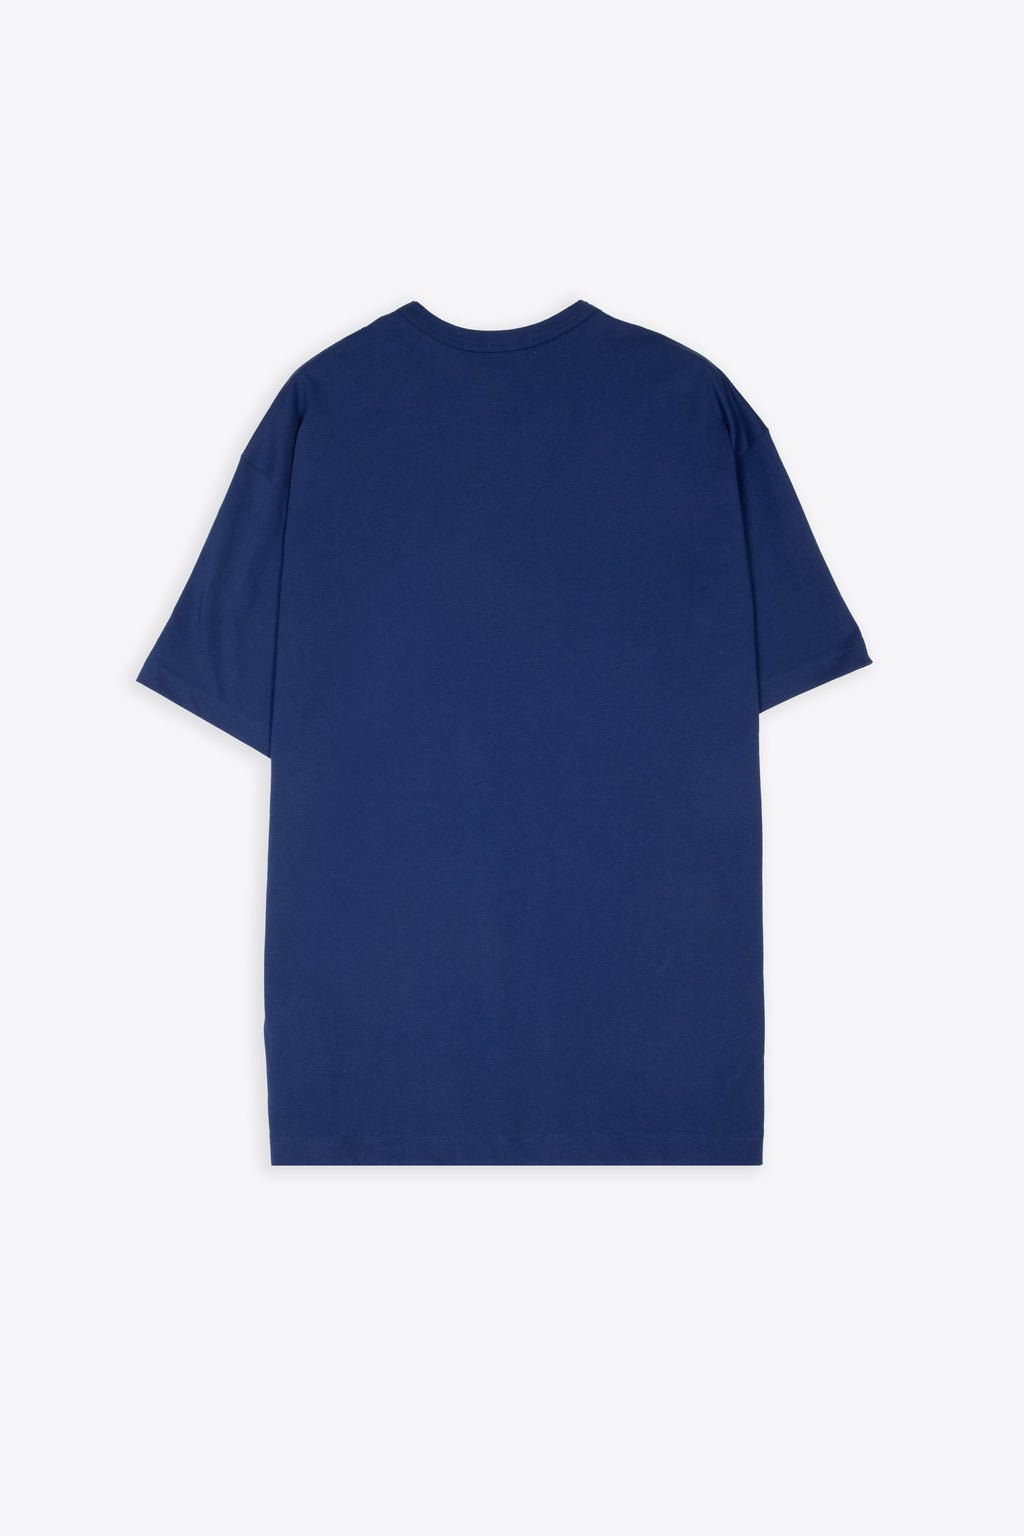 alt-image__Navy-blue-cotton-oversize-t-shirt-with-logo